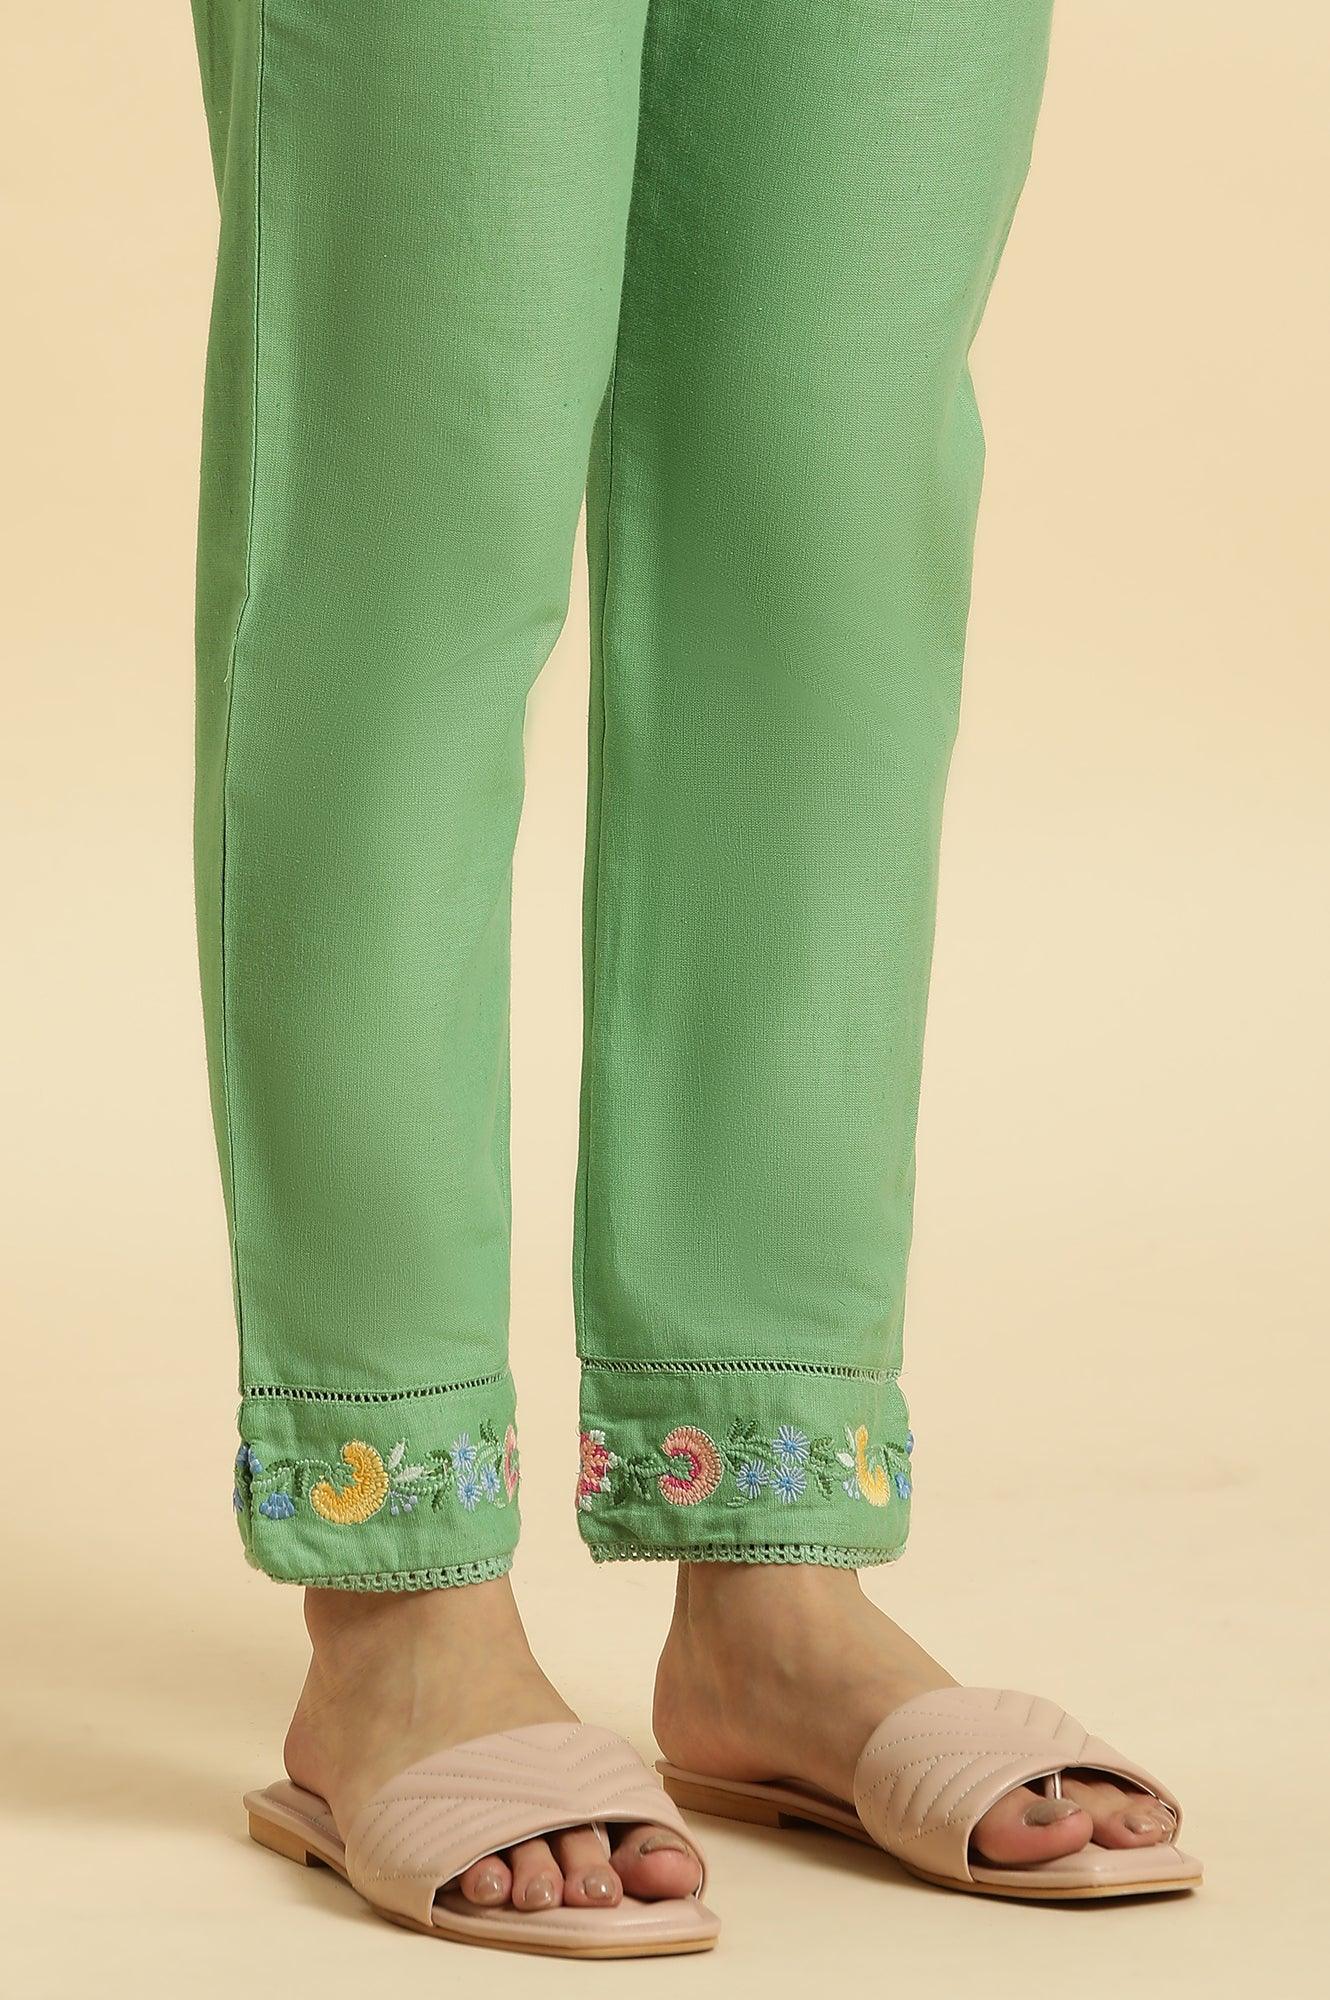 Green Slim Pants Wit Embroidery At Hem - wforwoman